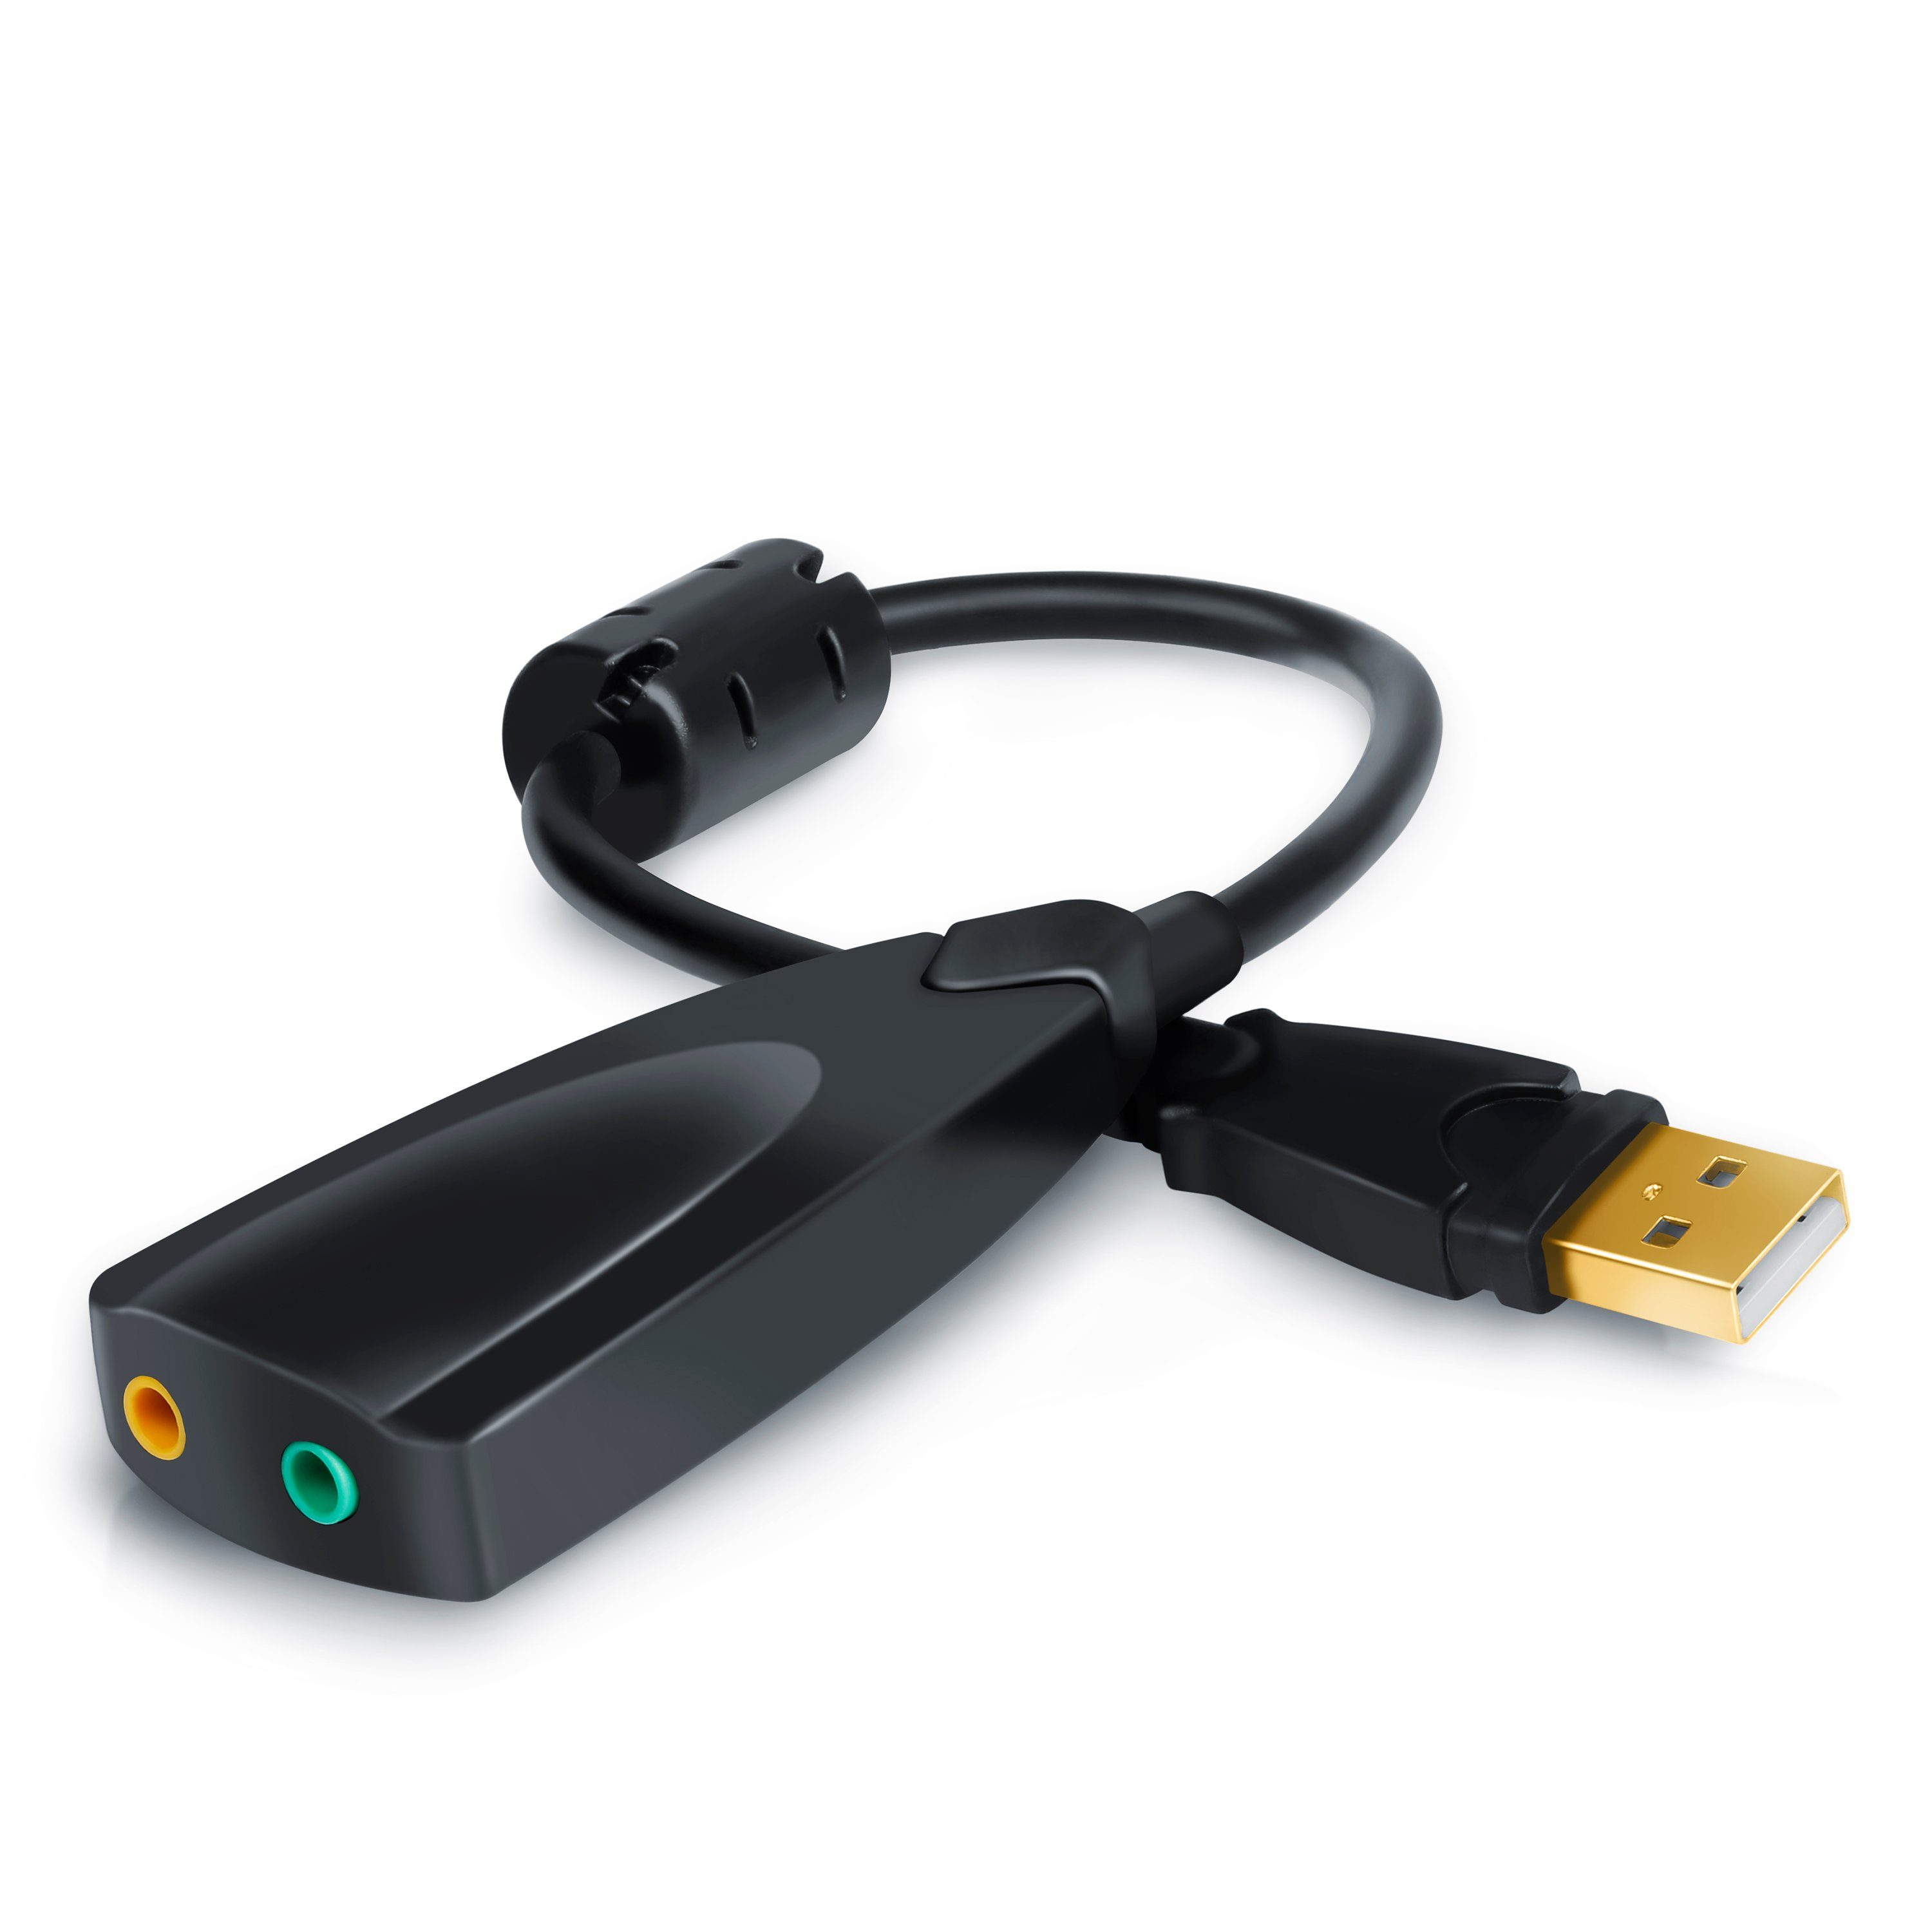 Aplic USB-Soundkarte Virtual 7.1 Surround, extern - Windows 10 & Mac OS X kompatibel